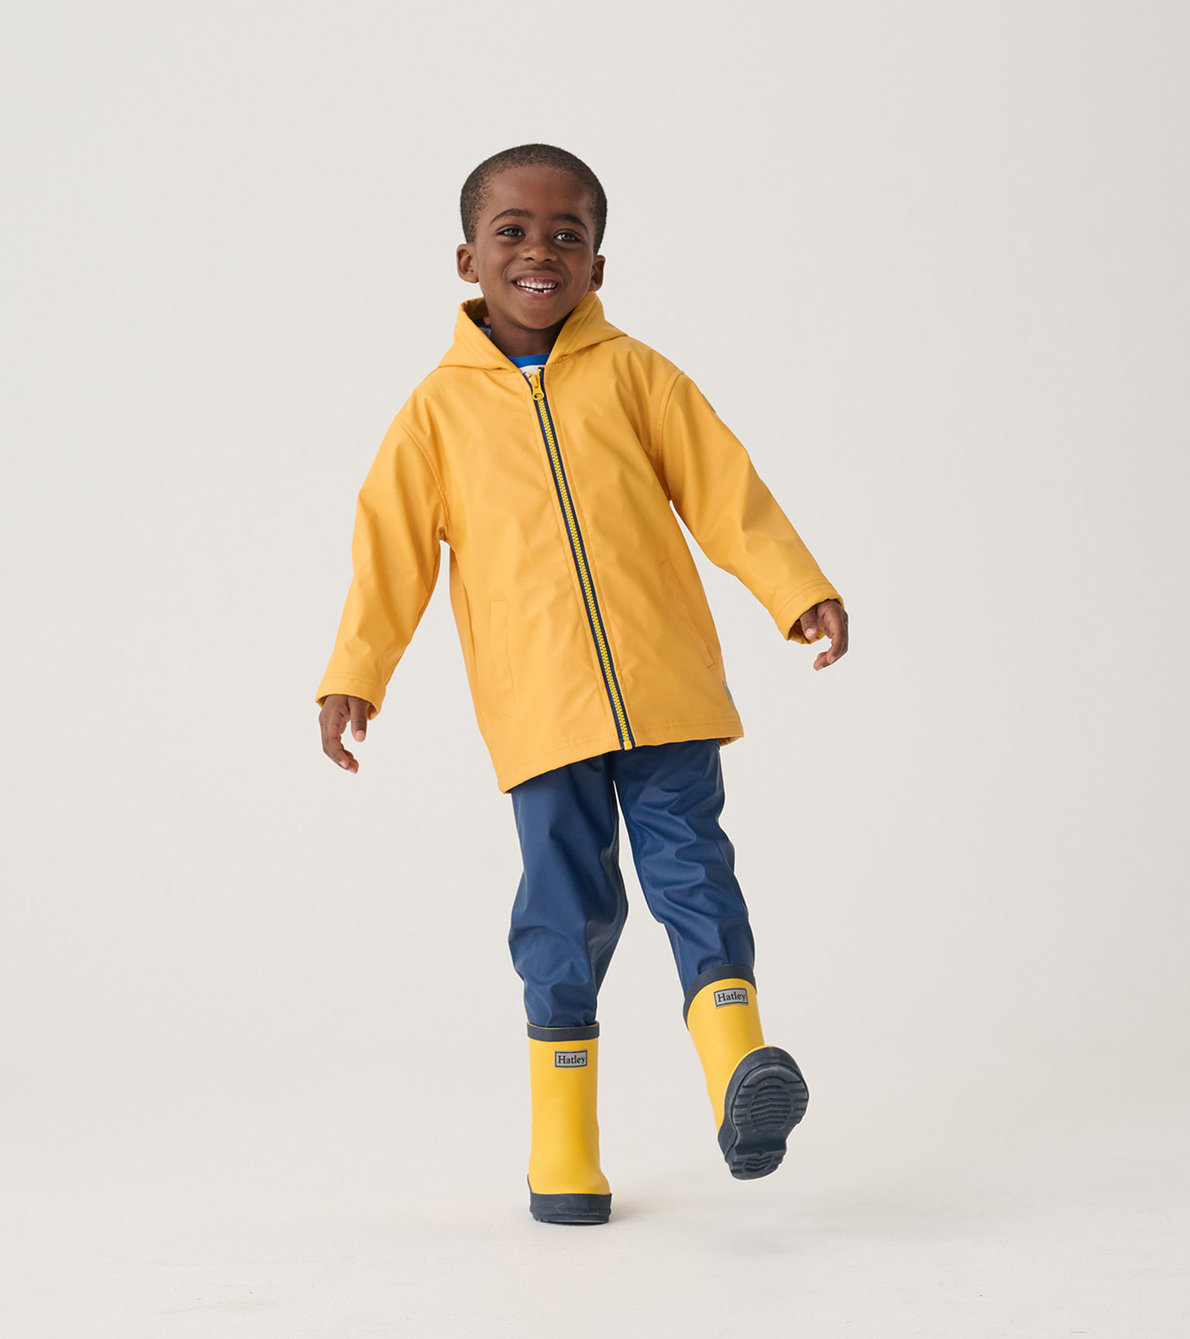 View larger image of Kids Yellow & Navy Matte Rain Boots